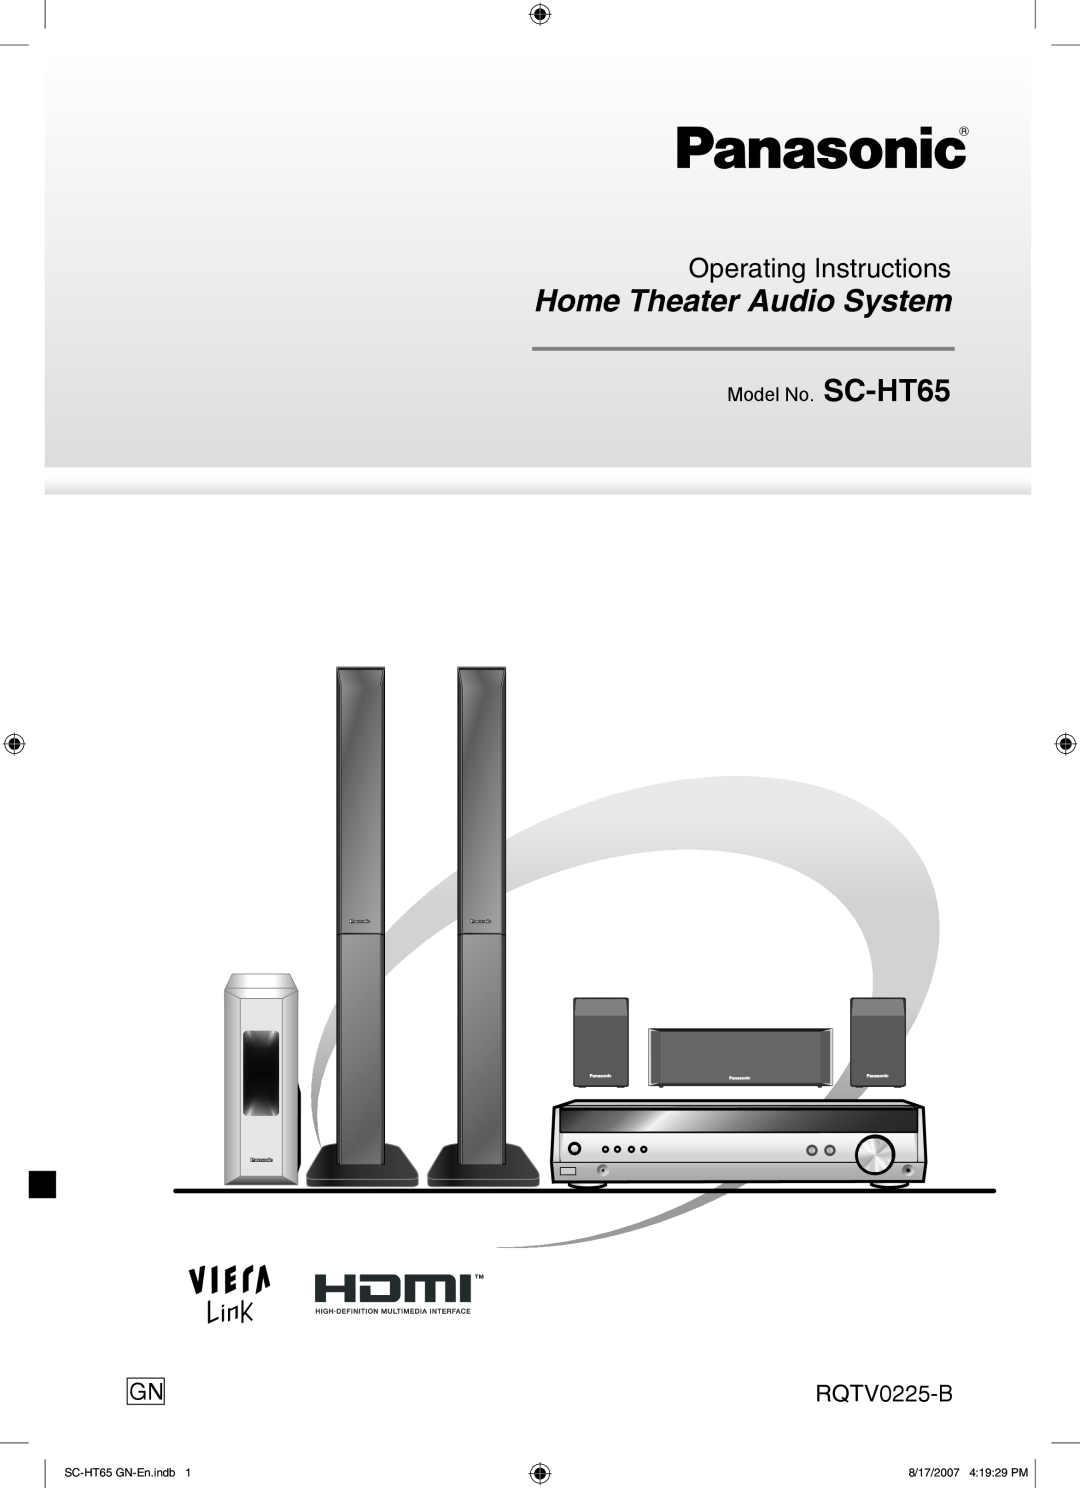 Panasonic manual RQTV0225-B, Home Theater Audio System, Operating Instructions, Model No. SC-HT65, SC-HT65 GN-En.indb1 